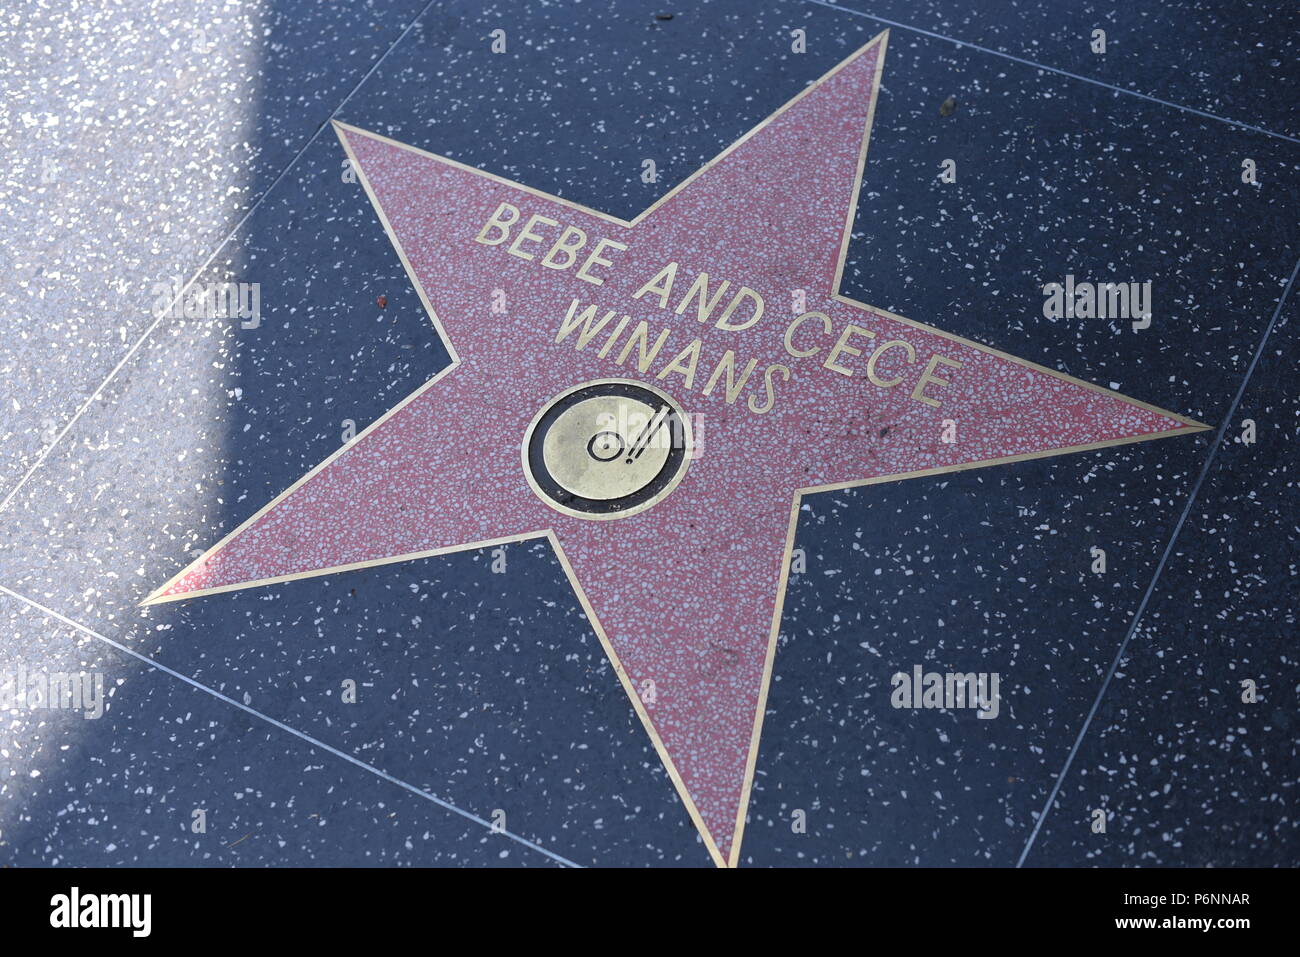 HOLLYWOOD, CA - 29. Juni: Bebe und Cece Winans Stern auf dem Hollywood Walk of Fame in Hollywood, Kalifornien am 29. Juni 2018. Stockfoto